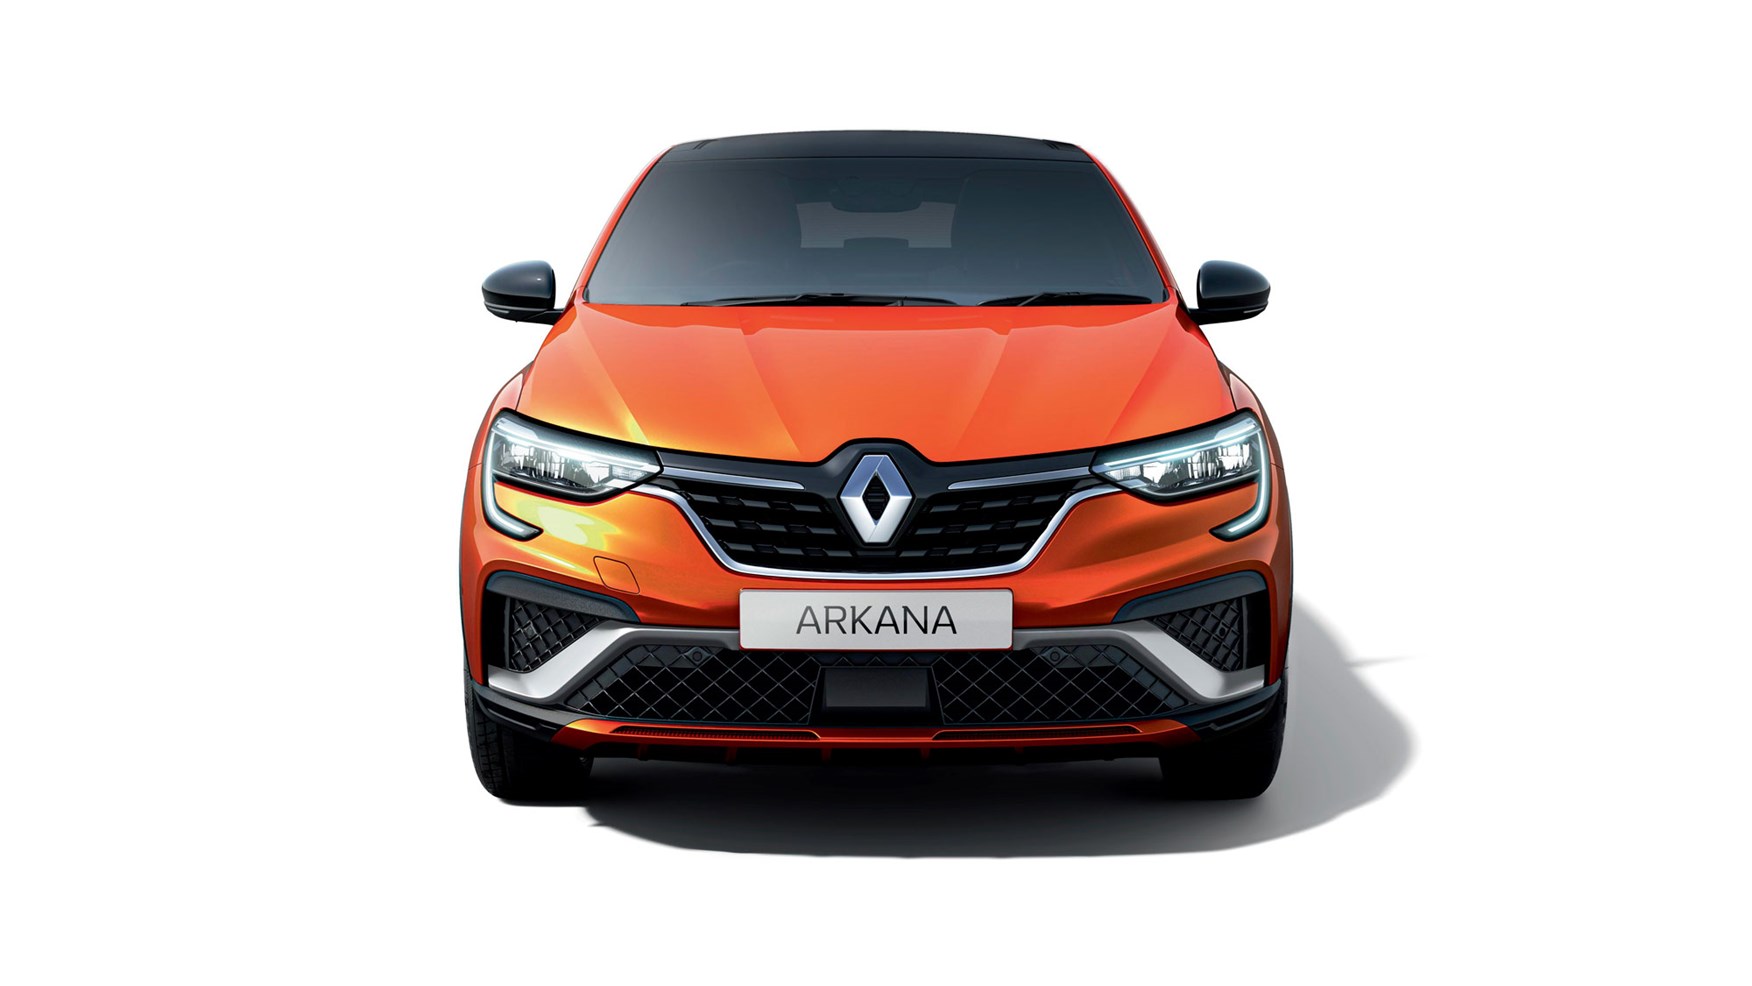 Arkana democratizes the premium class hybrid SUV coupe - Renault Group